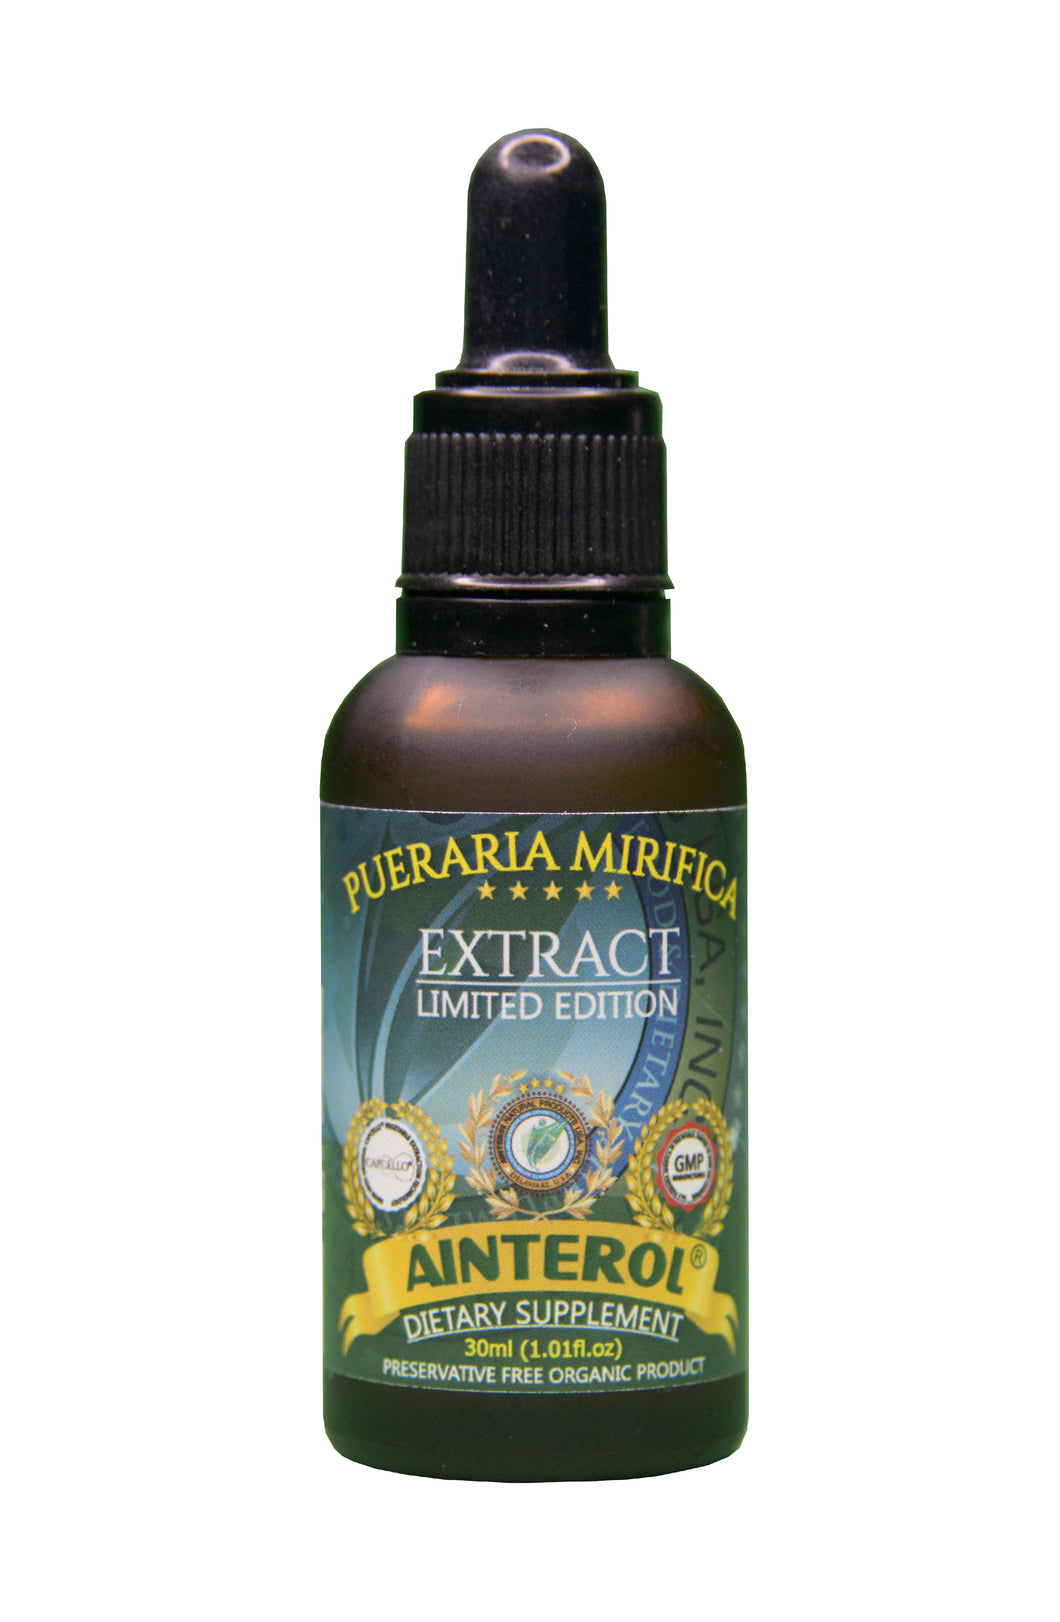 AINTEROL® Extracto de Pueraria Mirifica 30ml (1.01fl.oz)